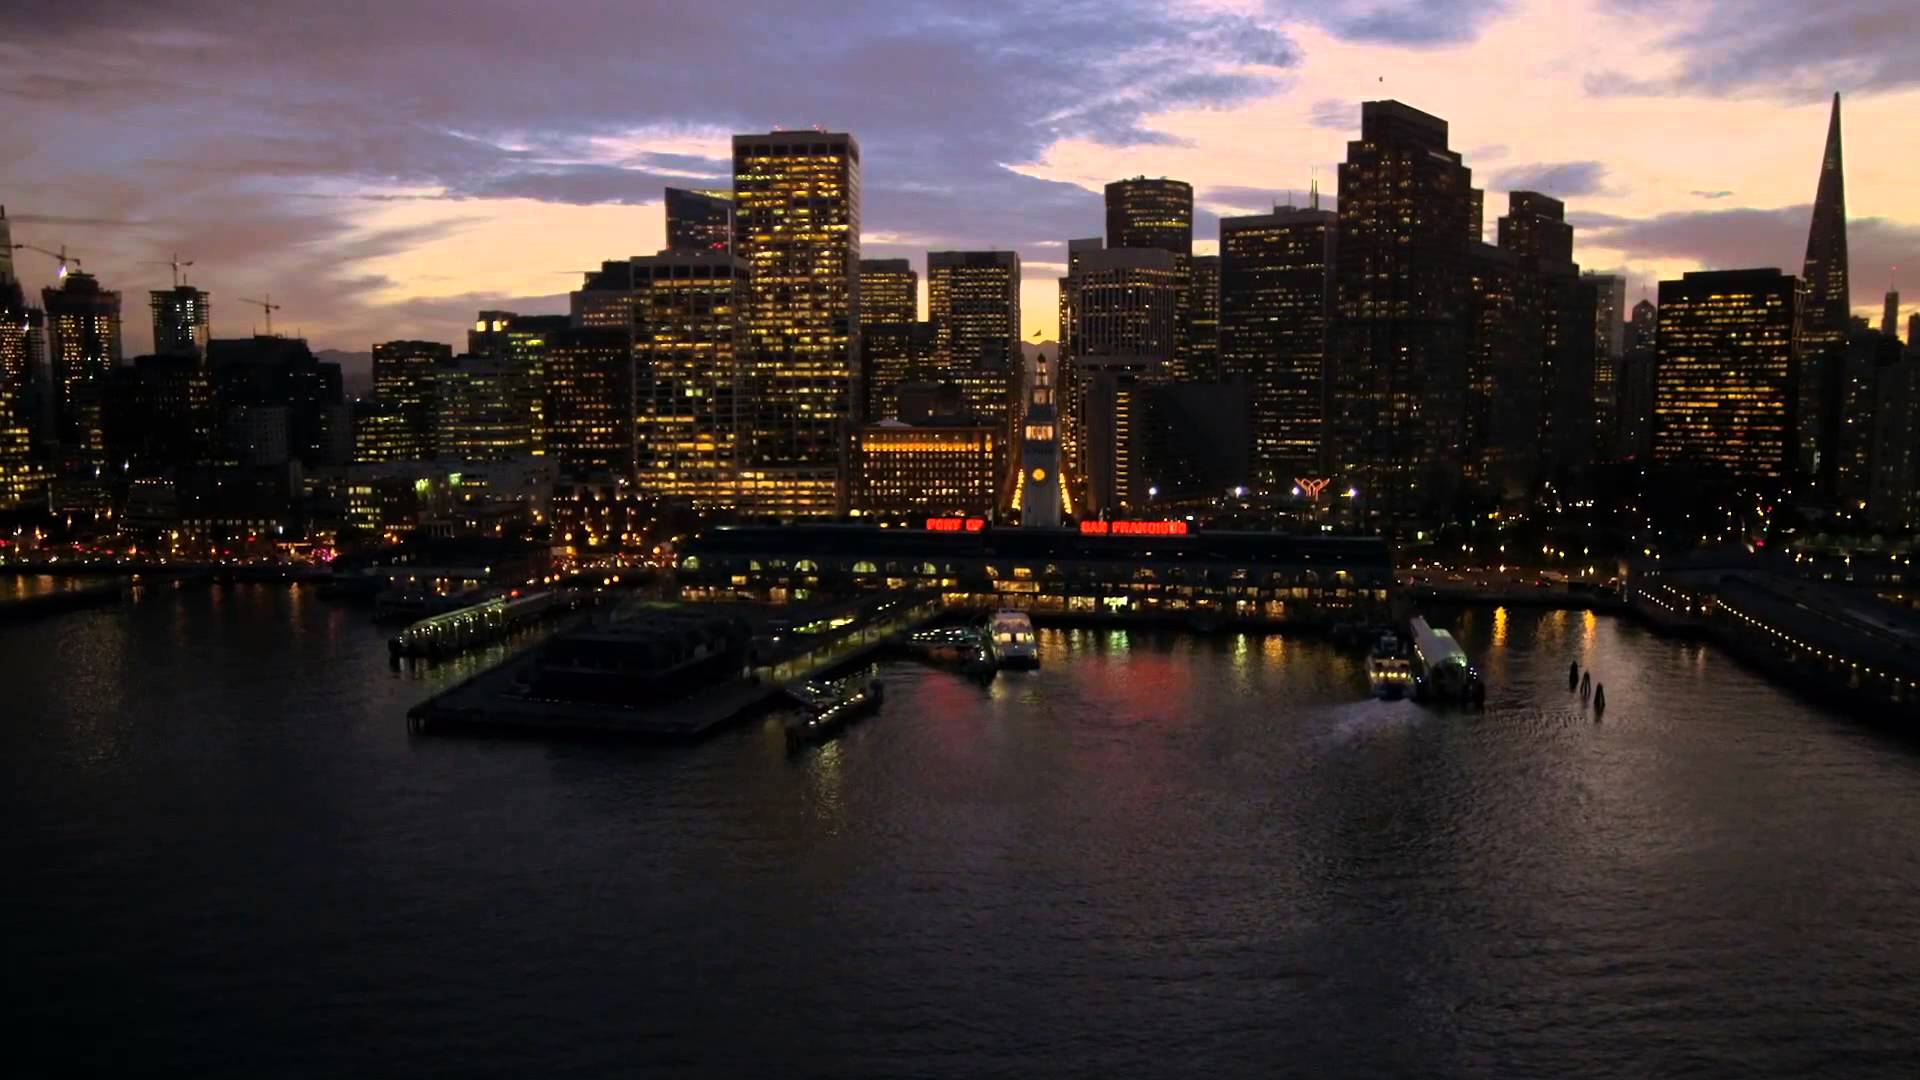 Apple TV 4 Aerial Screensaver of San Francisco (Night) +